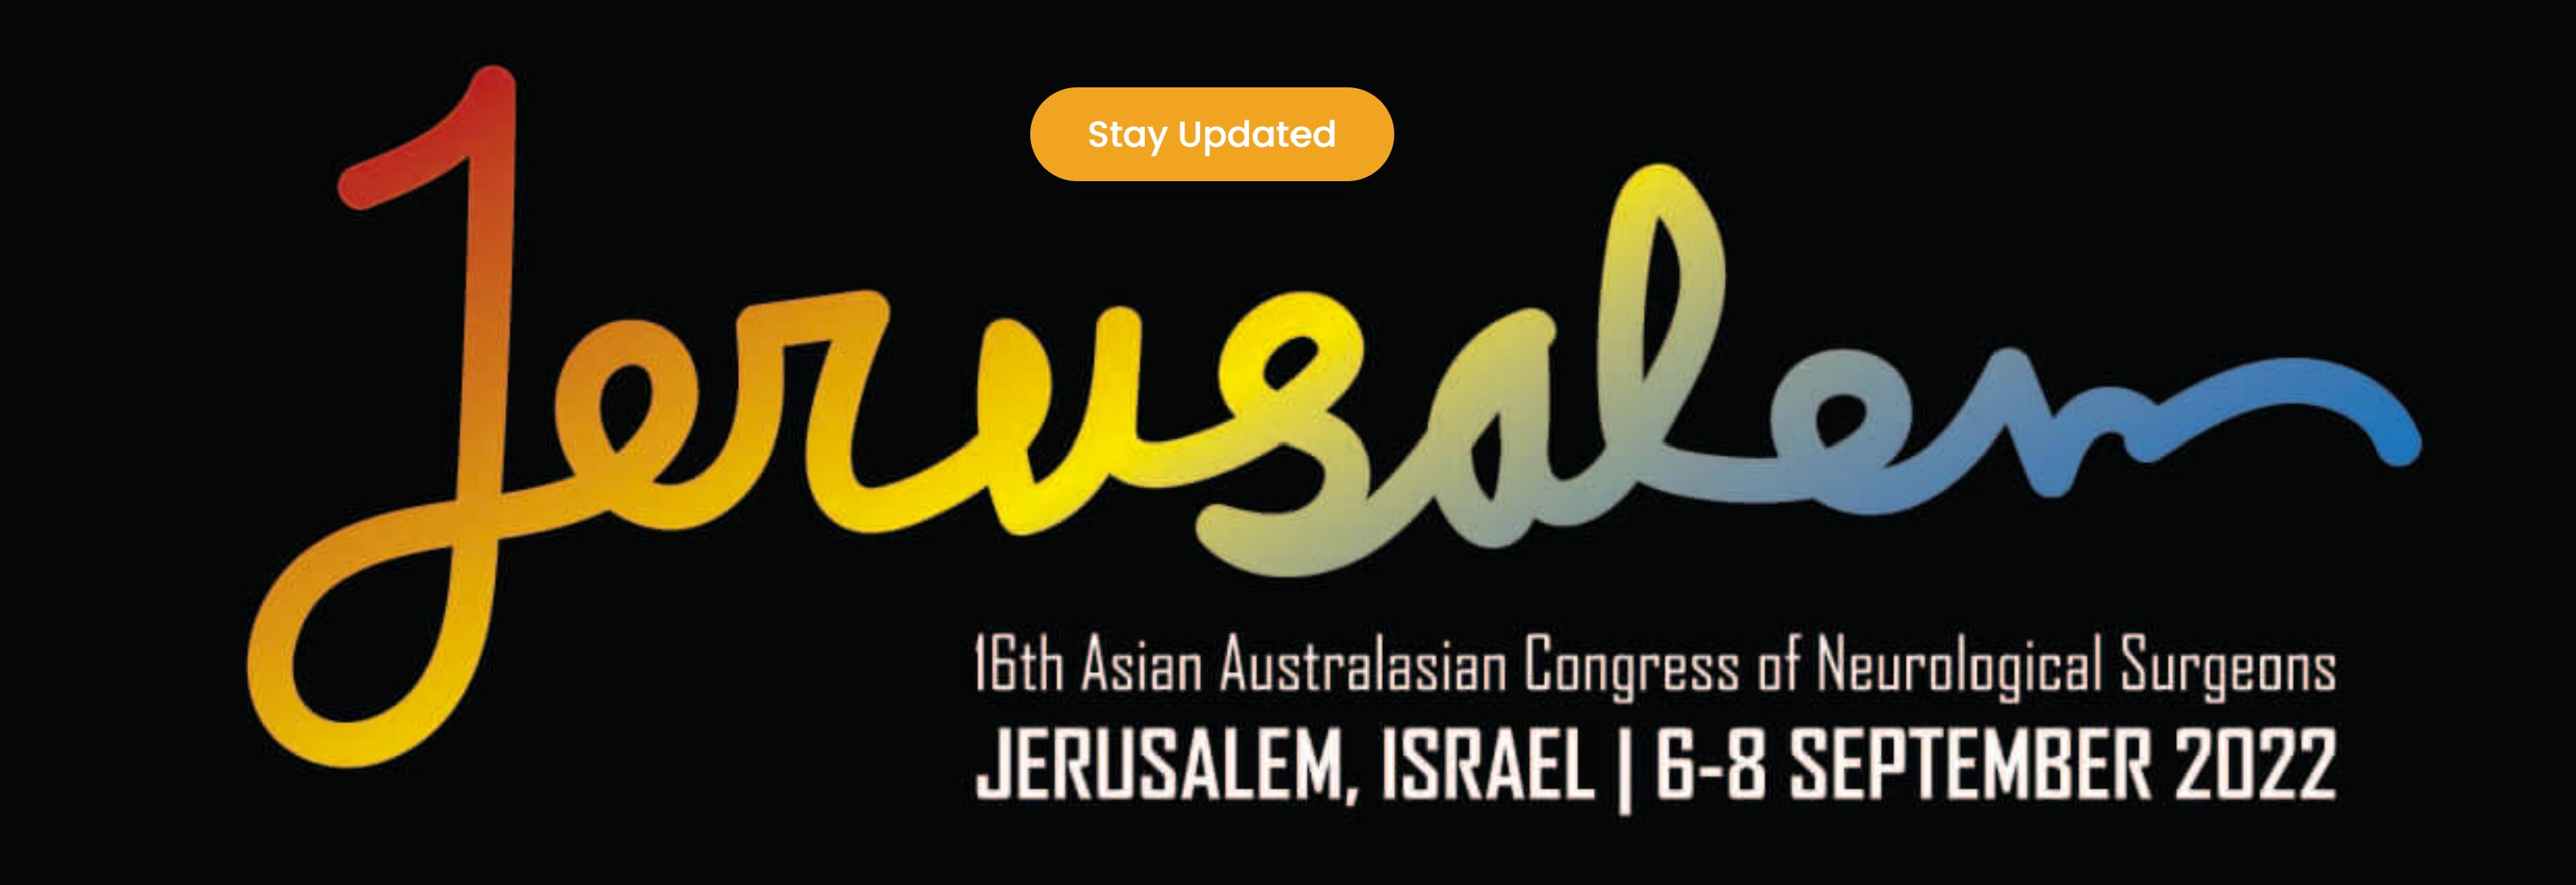 16th Congress of the Asian Australasian Society of Neurological Surgeons (AASNS) יתקיים ב-ספטמבר 2022, בירושלים